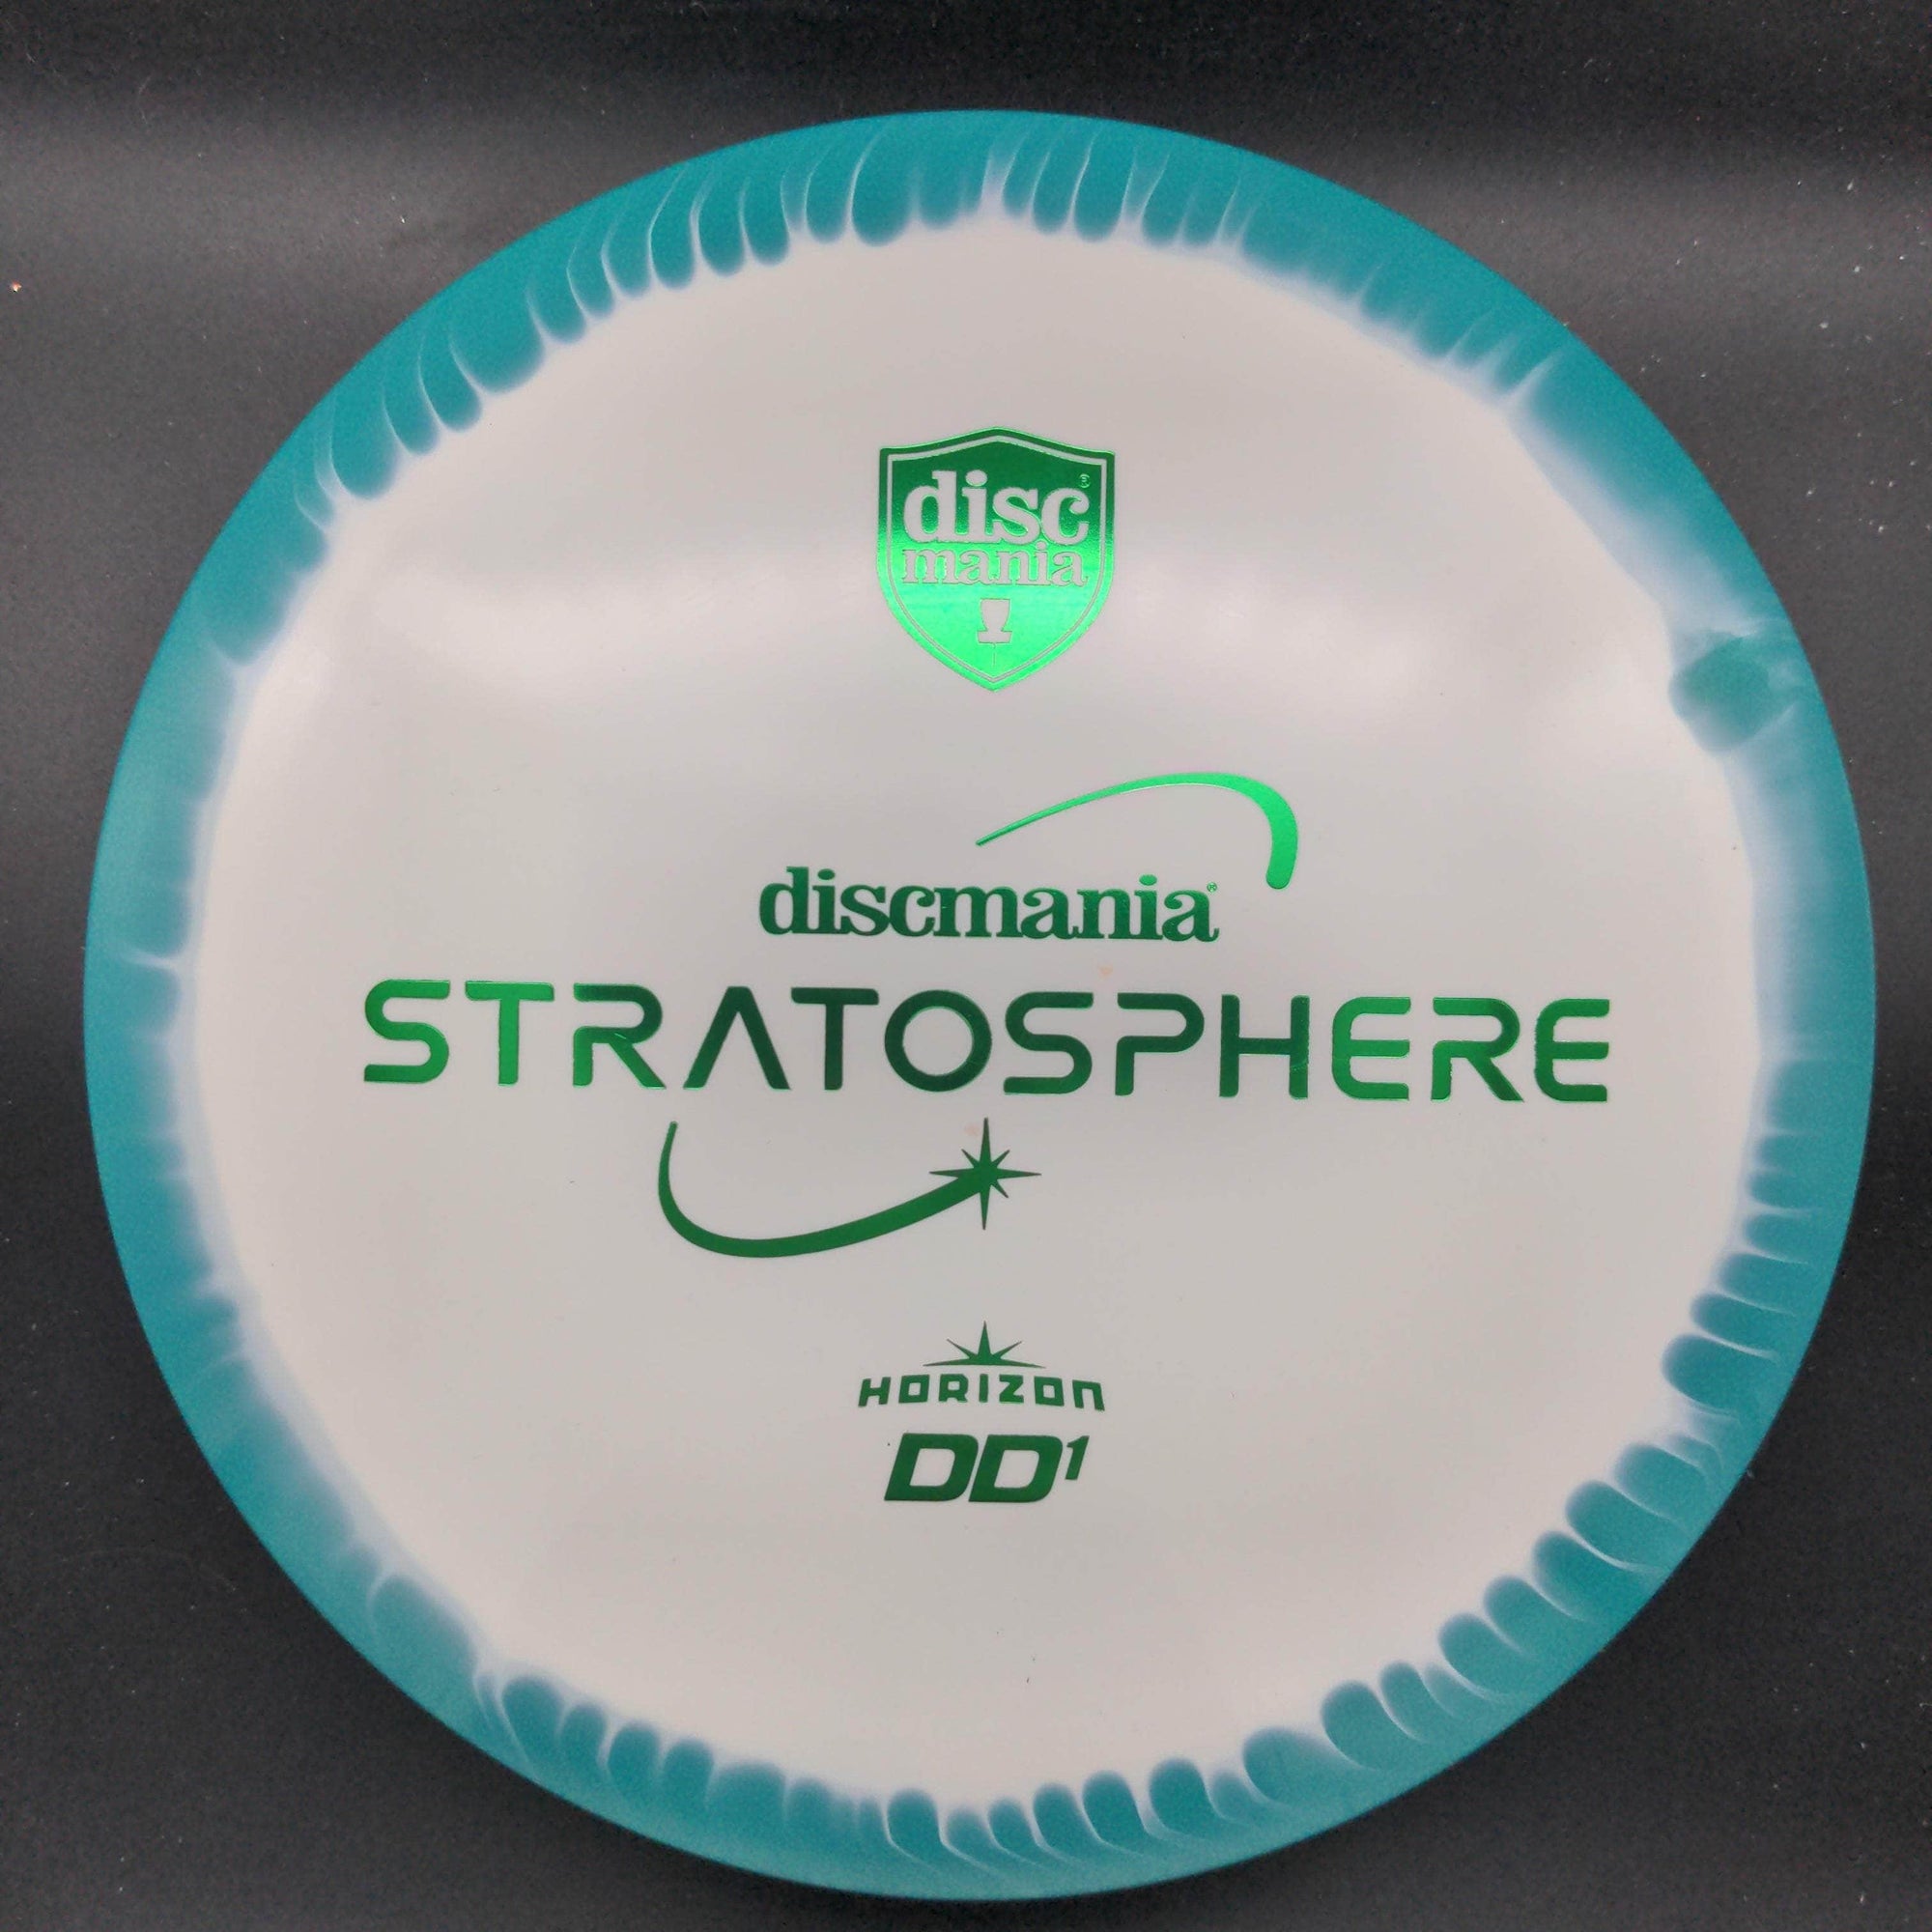 Discmania Distance Driver Copy of Old---Stratosphere (DD1), Horizon Plastic